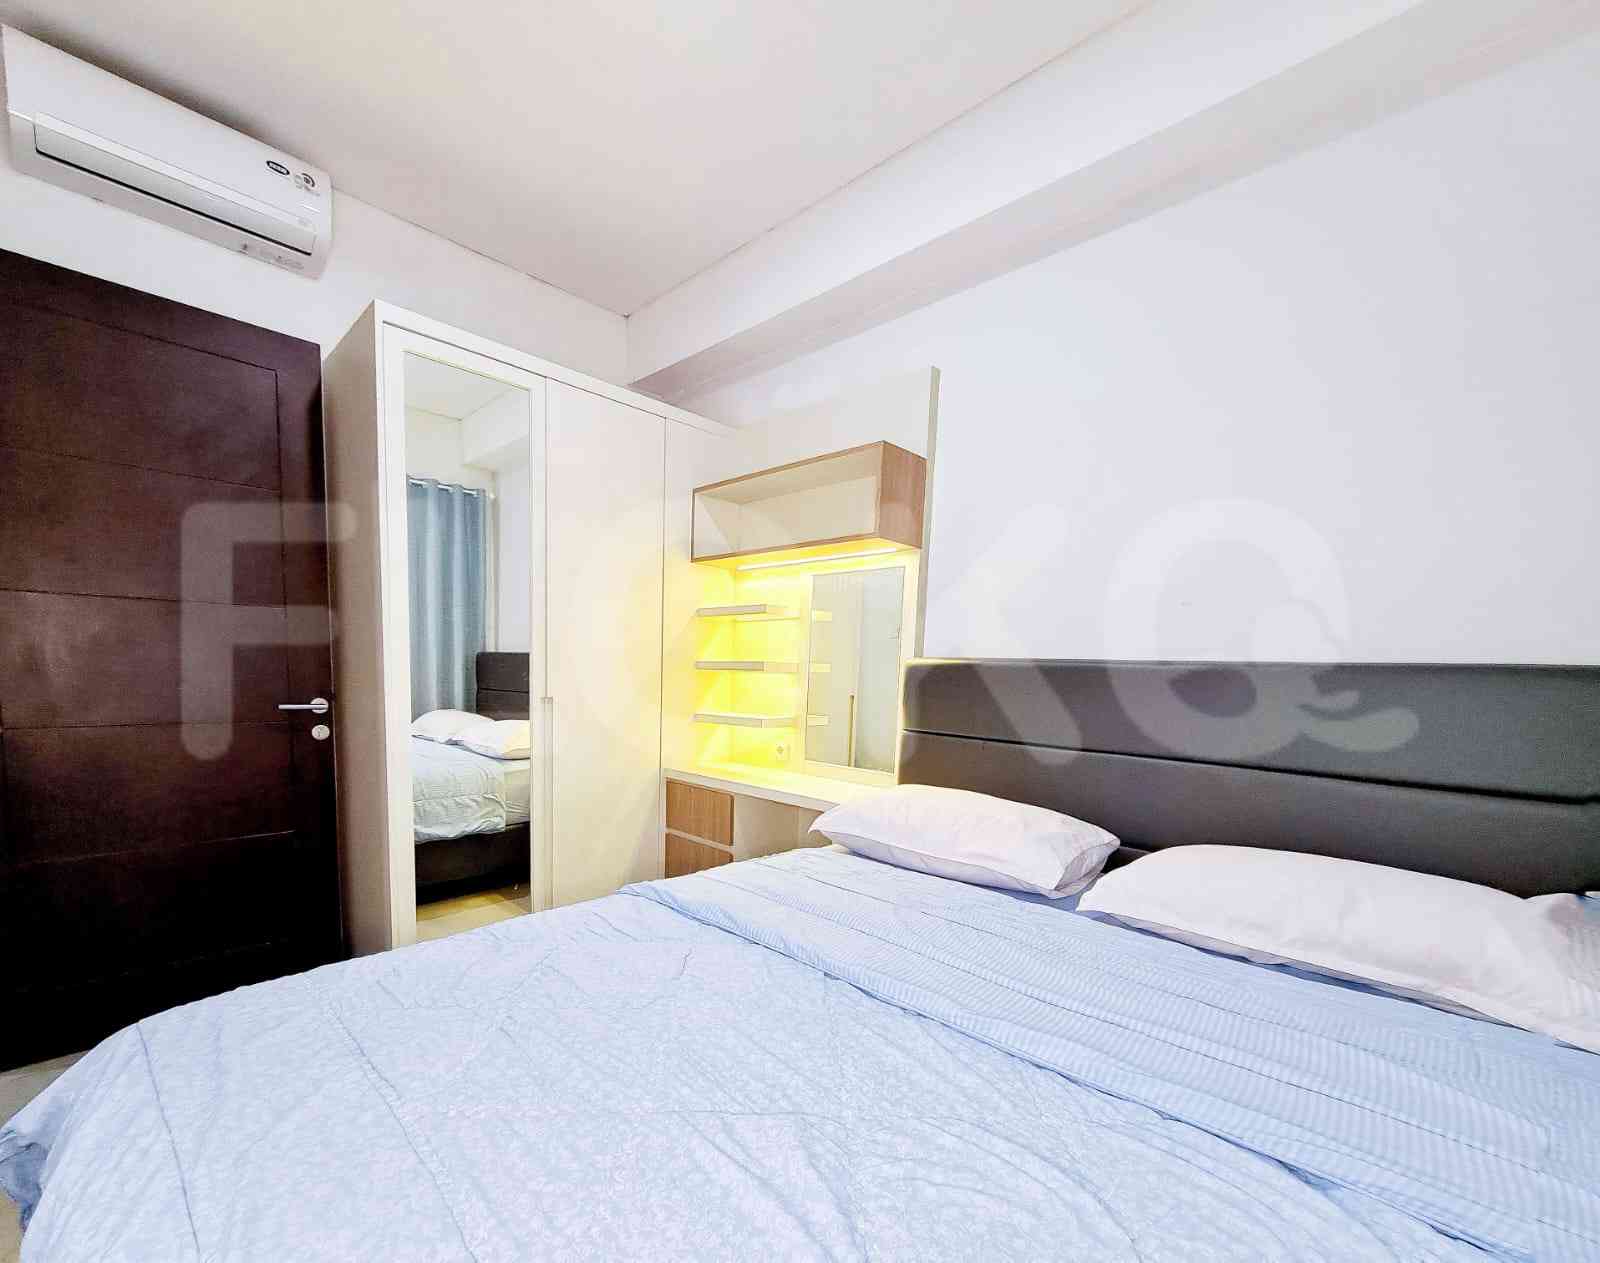 2 Bedroom on 5th Floor for Rent in Aspen Residence Apartment - ffa131 2